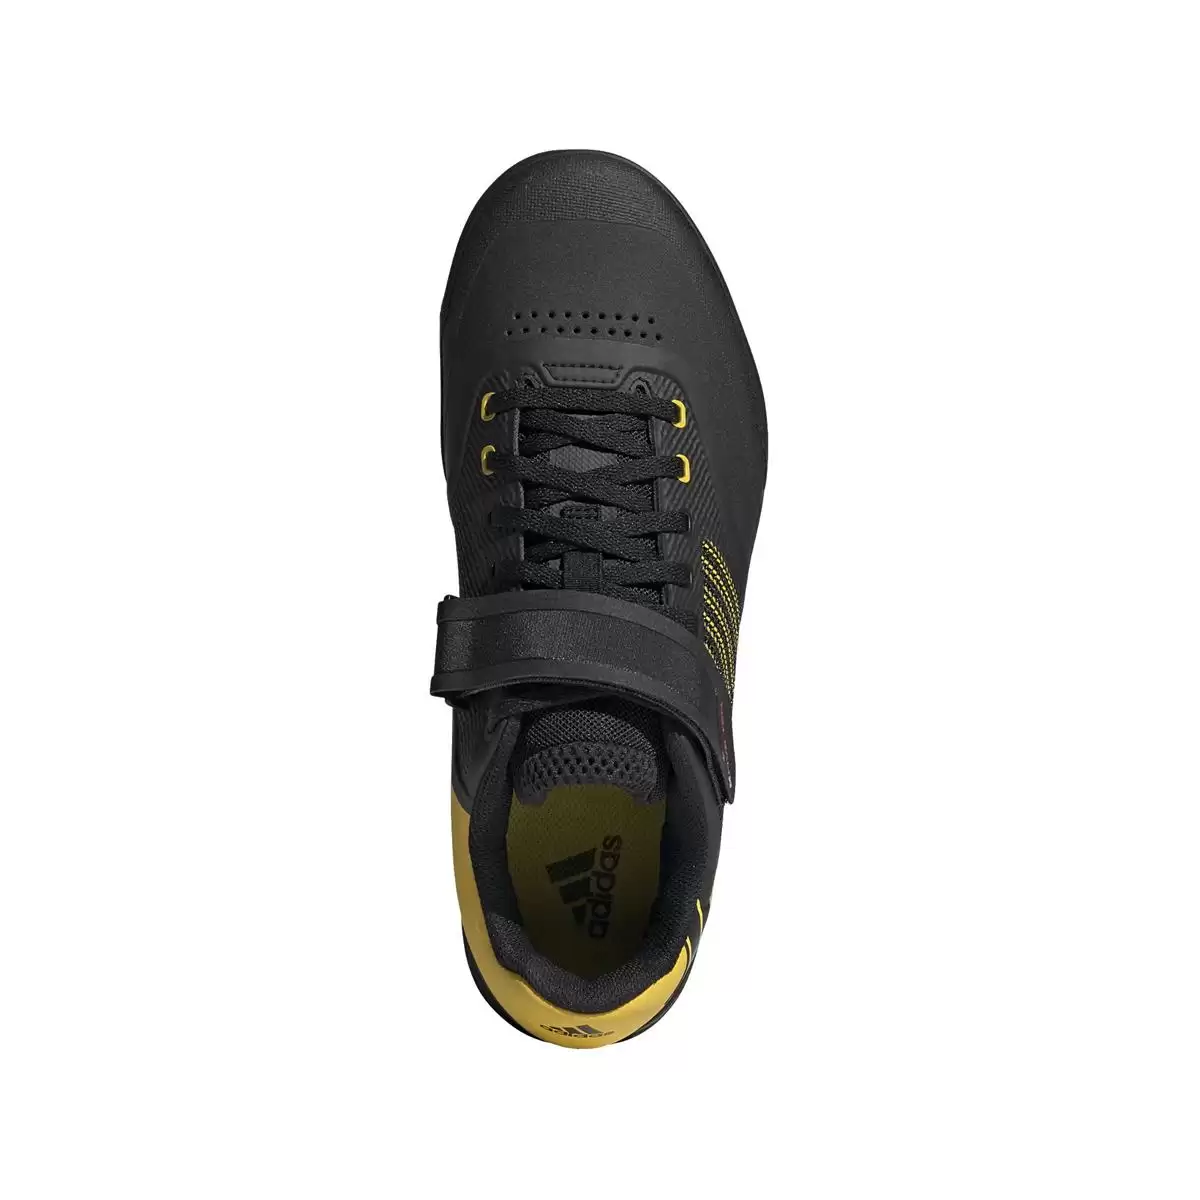 MTB Shoes Hellcat Pro Black/Yellow Size 44 #4